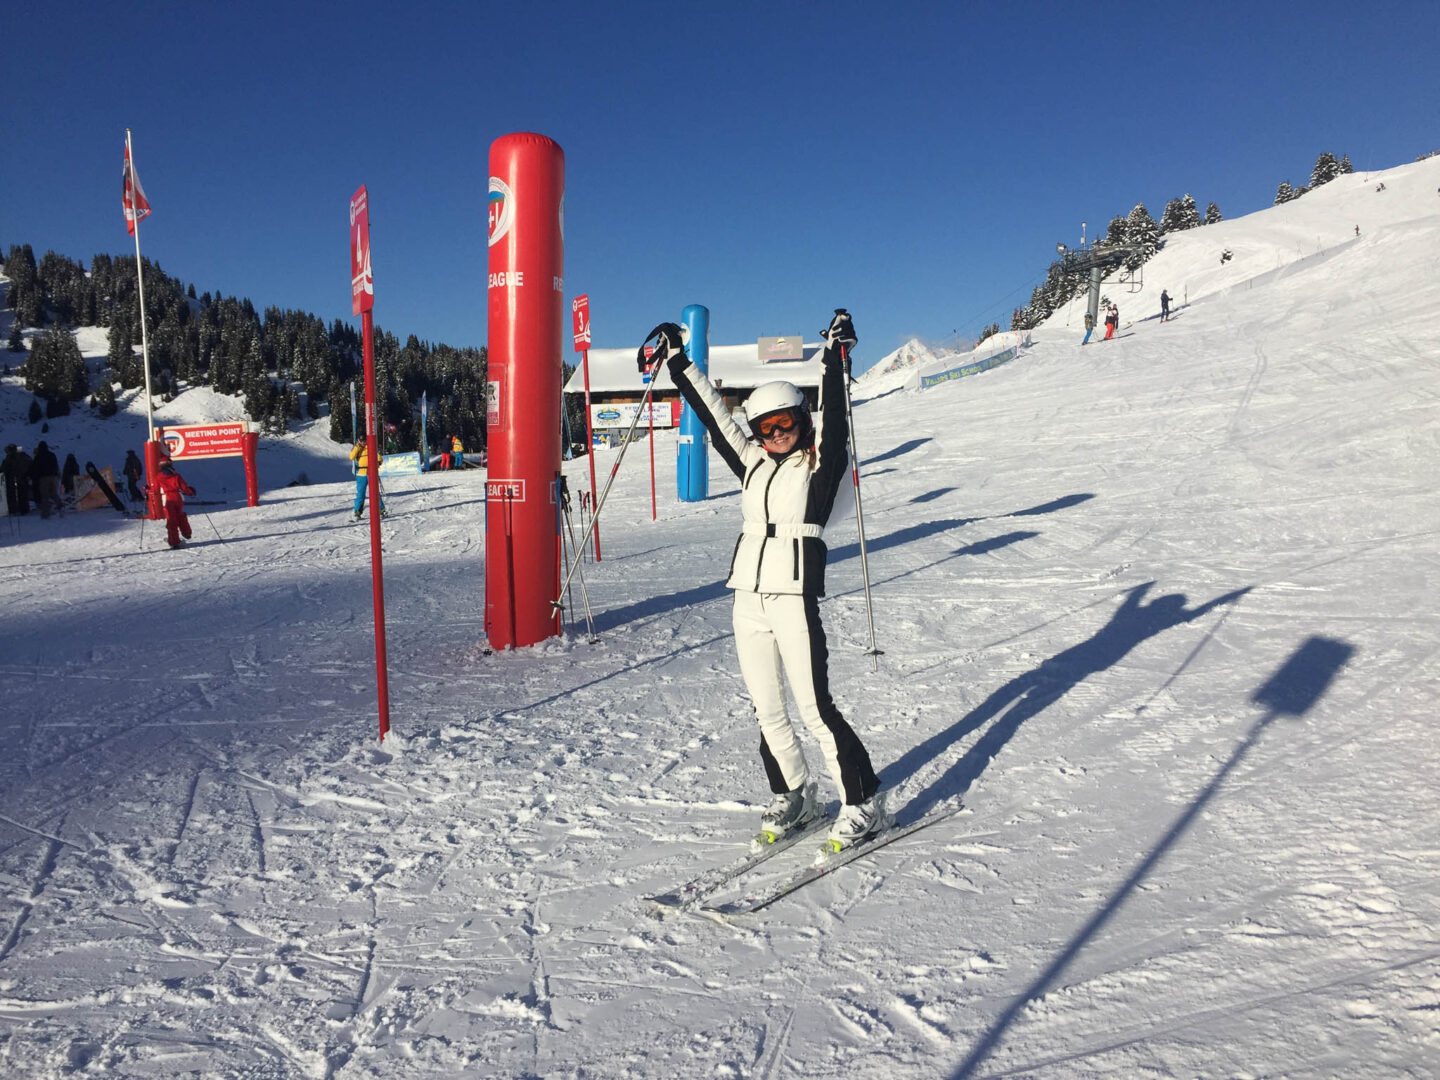 Villars skiing victory